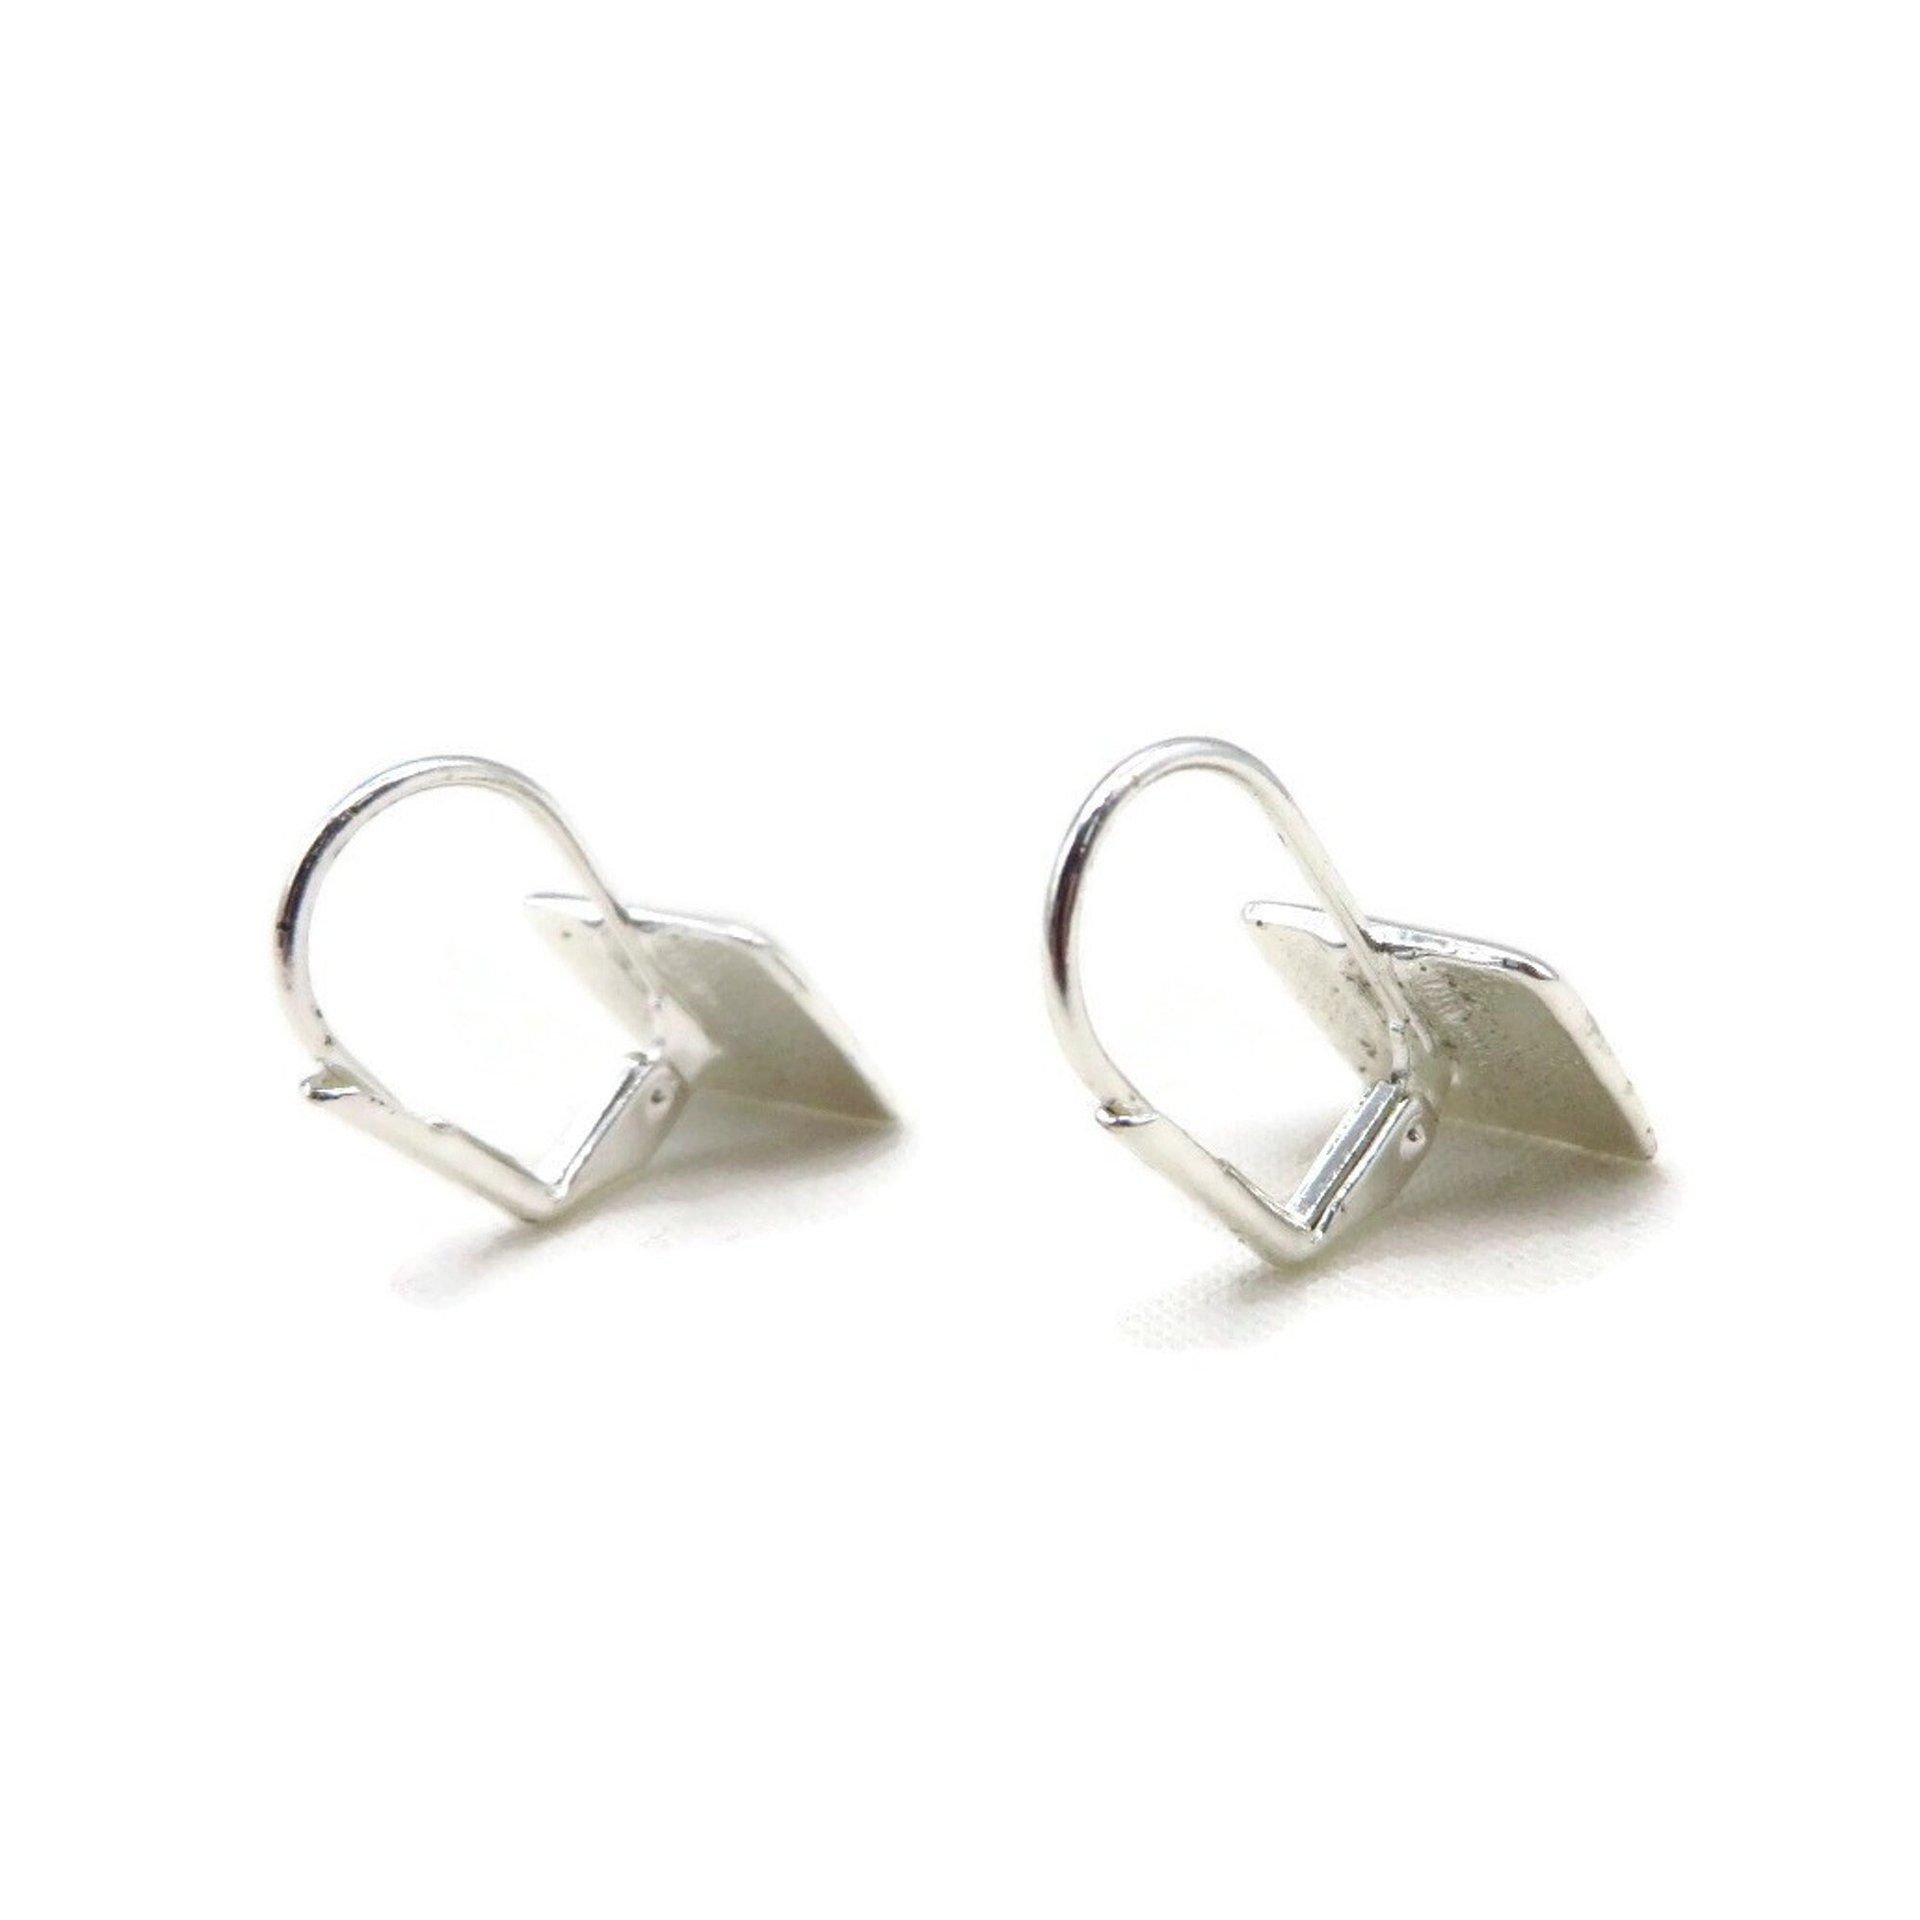 Modernist Silver Tone Square Latchback Earrings